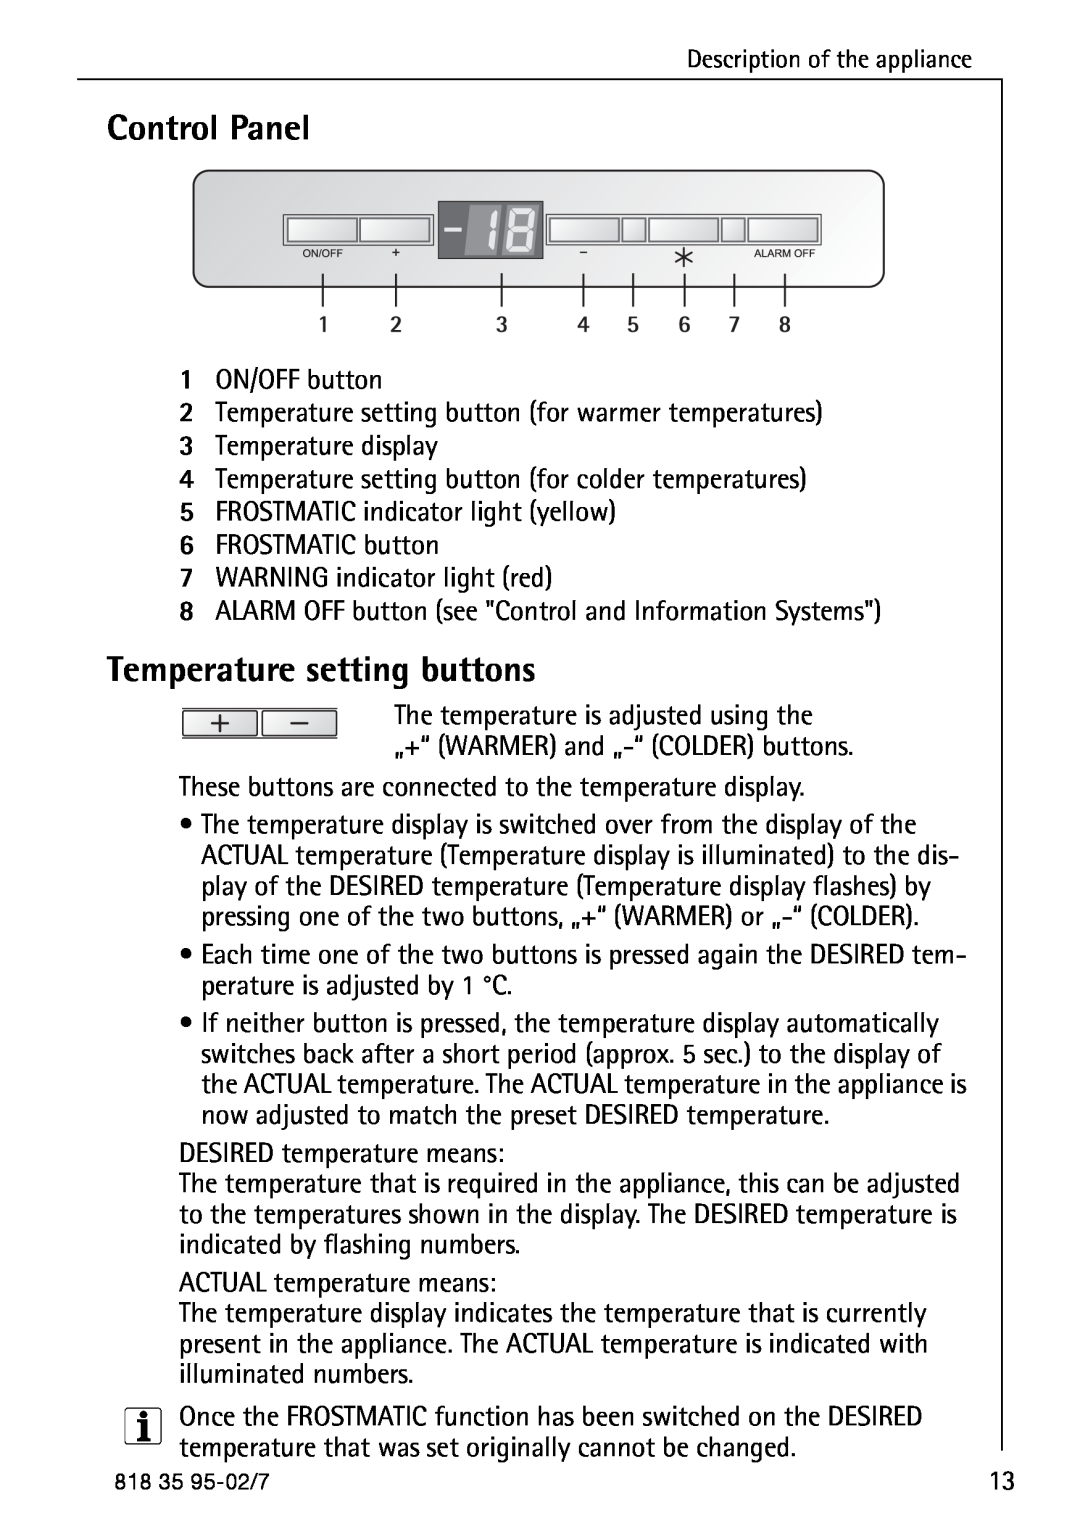 AEG S75578KG3 manual Temperature setting buttons, Control Panel, Description of the appliance 